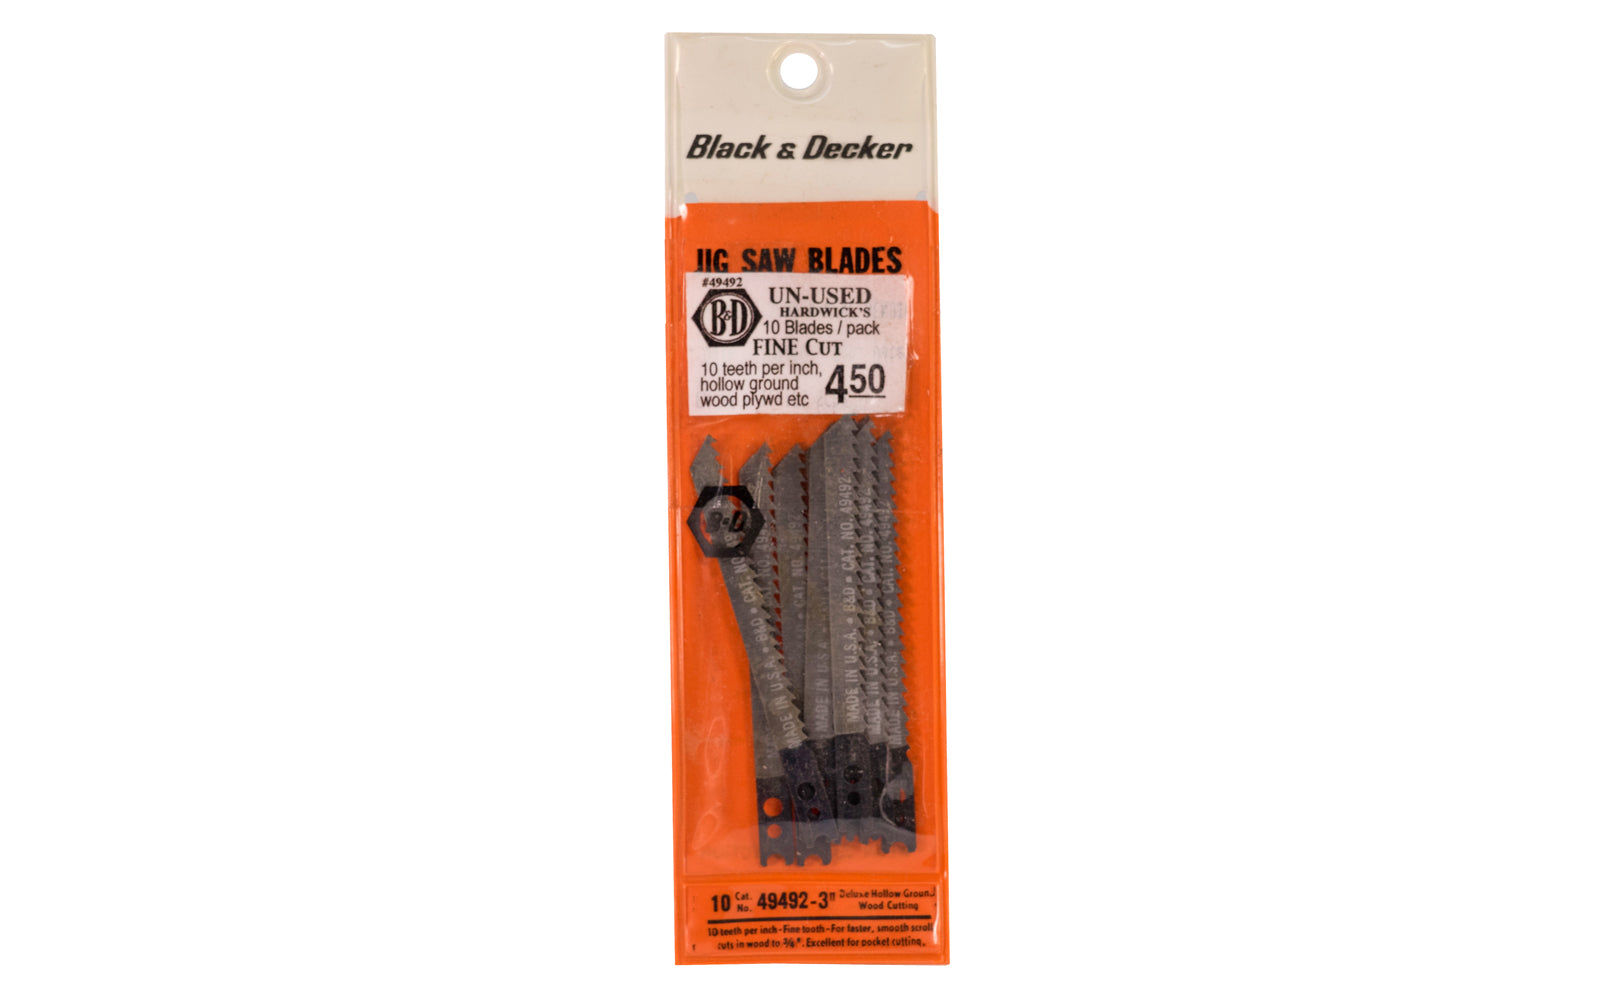 Black and Decker 10 TPI Jig Saw Blades, Fine - 10 PK. Hollow ground wood cutting. U-shank Black & Decker jigsaw blade.  Made in USA.